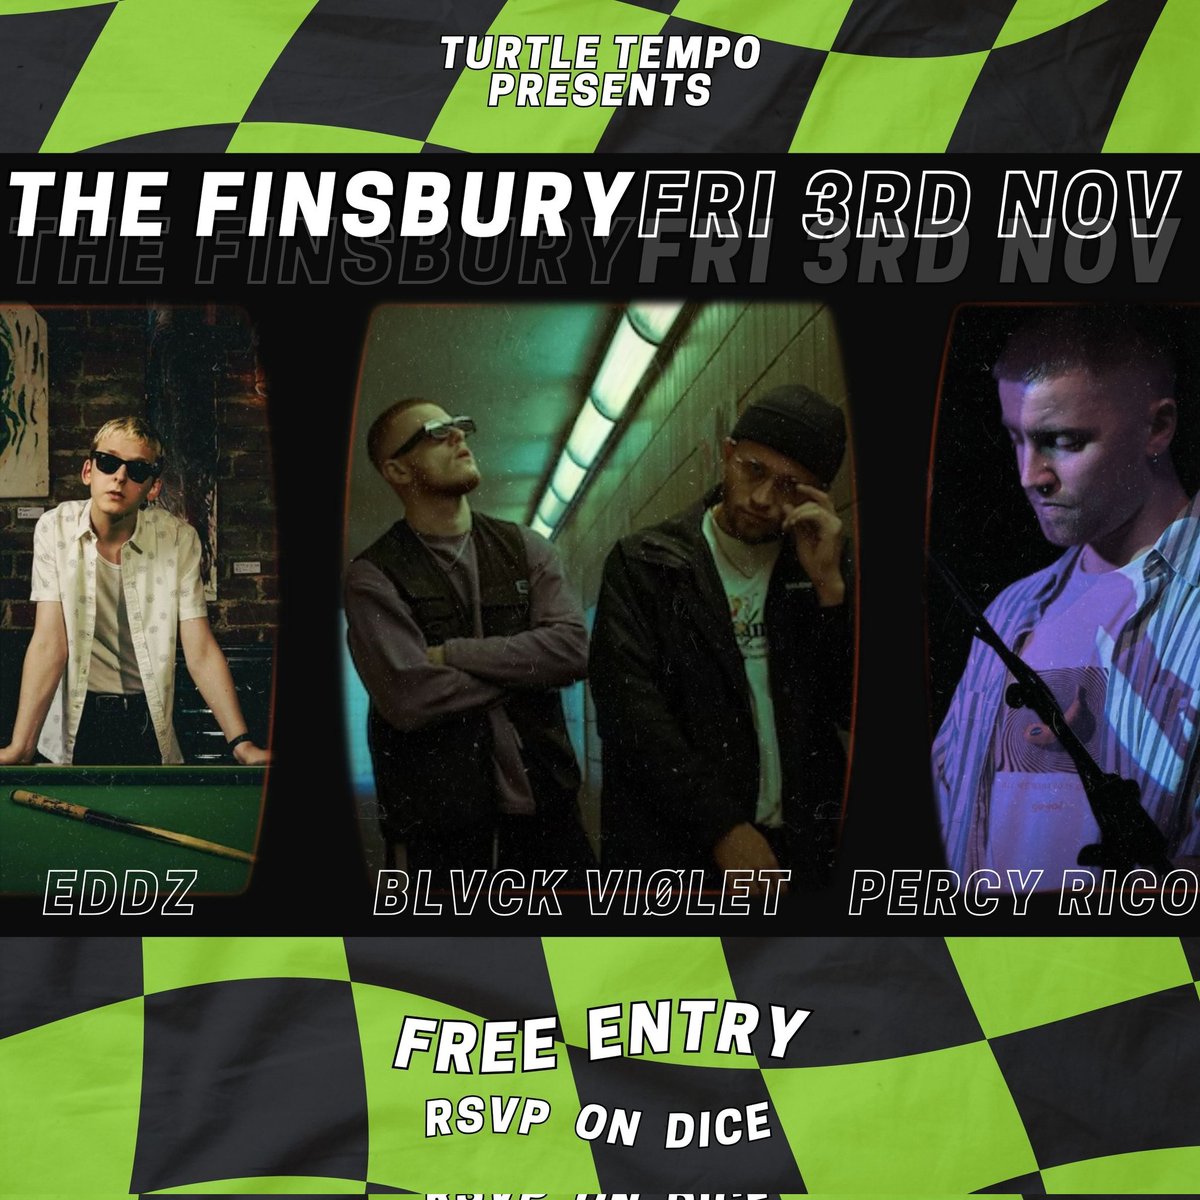 #coolgig @Eddzmusicuk plays #London 3rd November @TheFinPub as part of the @TurtleTempo showcase night FREE ENTRY!!